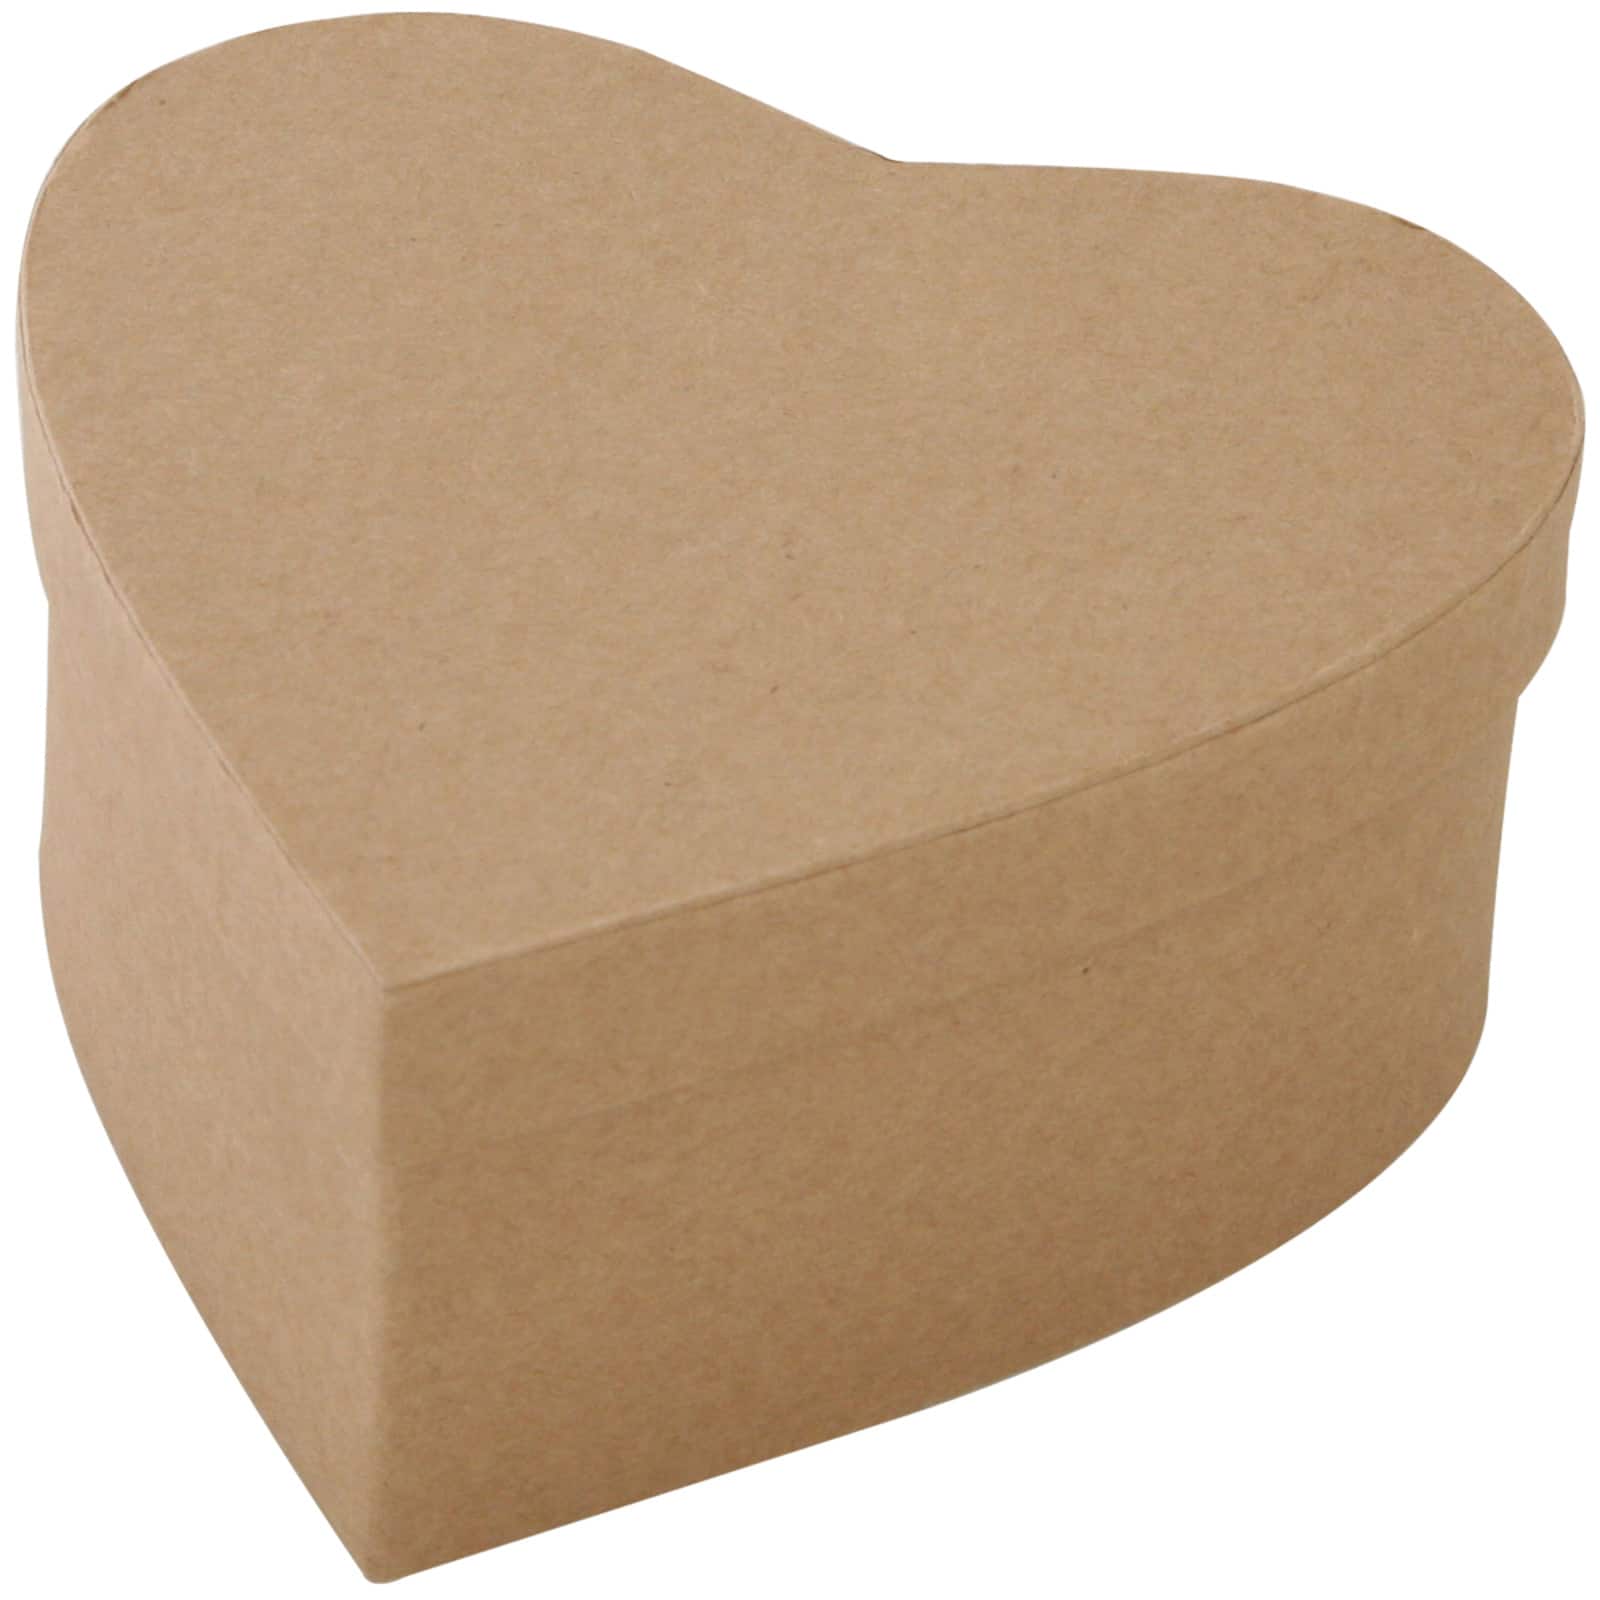 Paper Mache Heart Shaped Box - (7-1/2 x 7-1/2) Heart Shaped Papier Mache